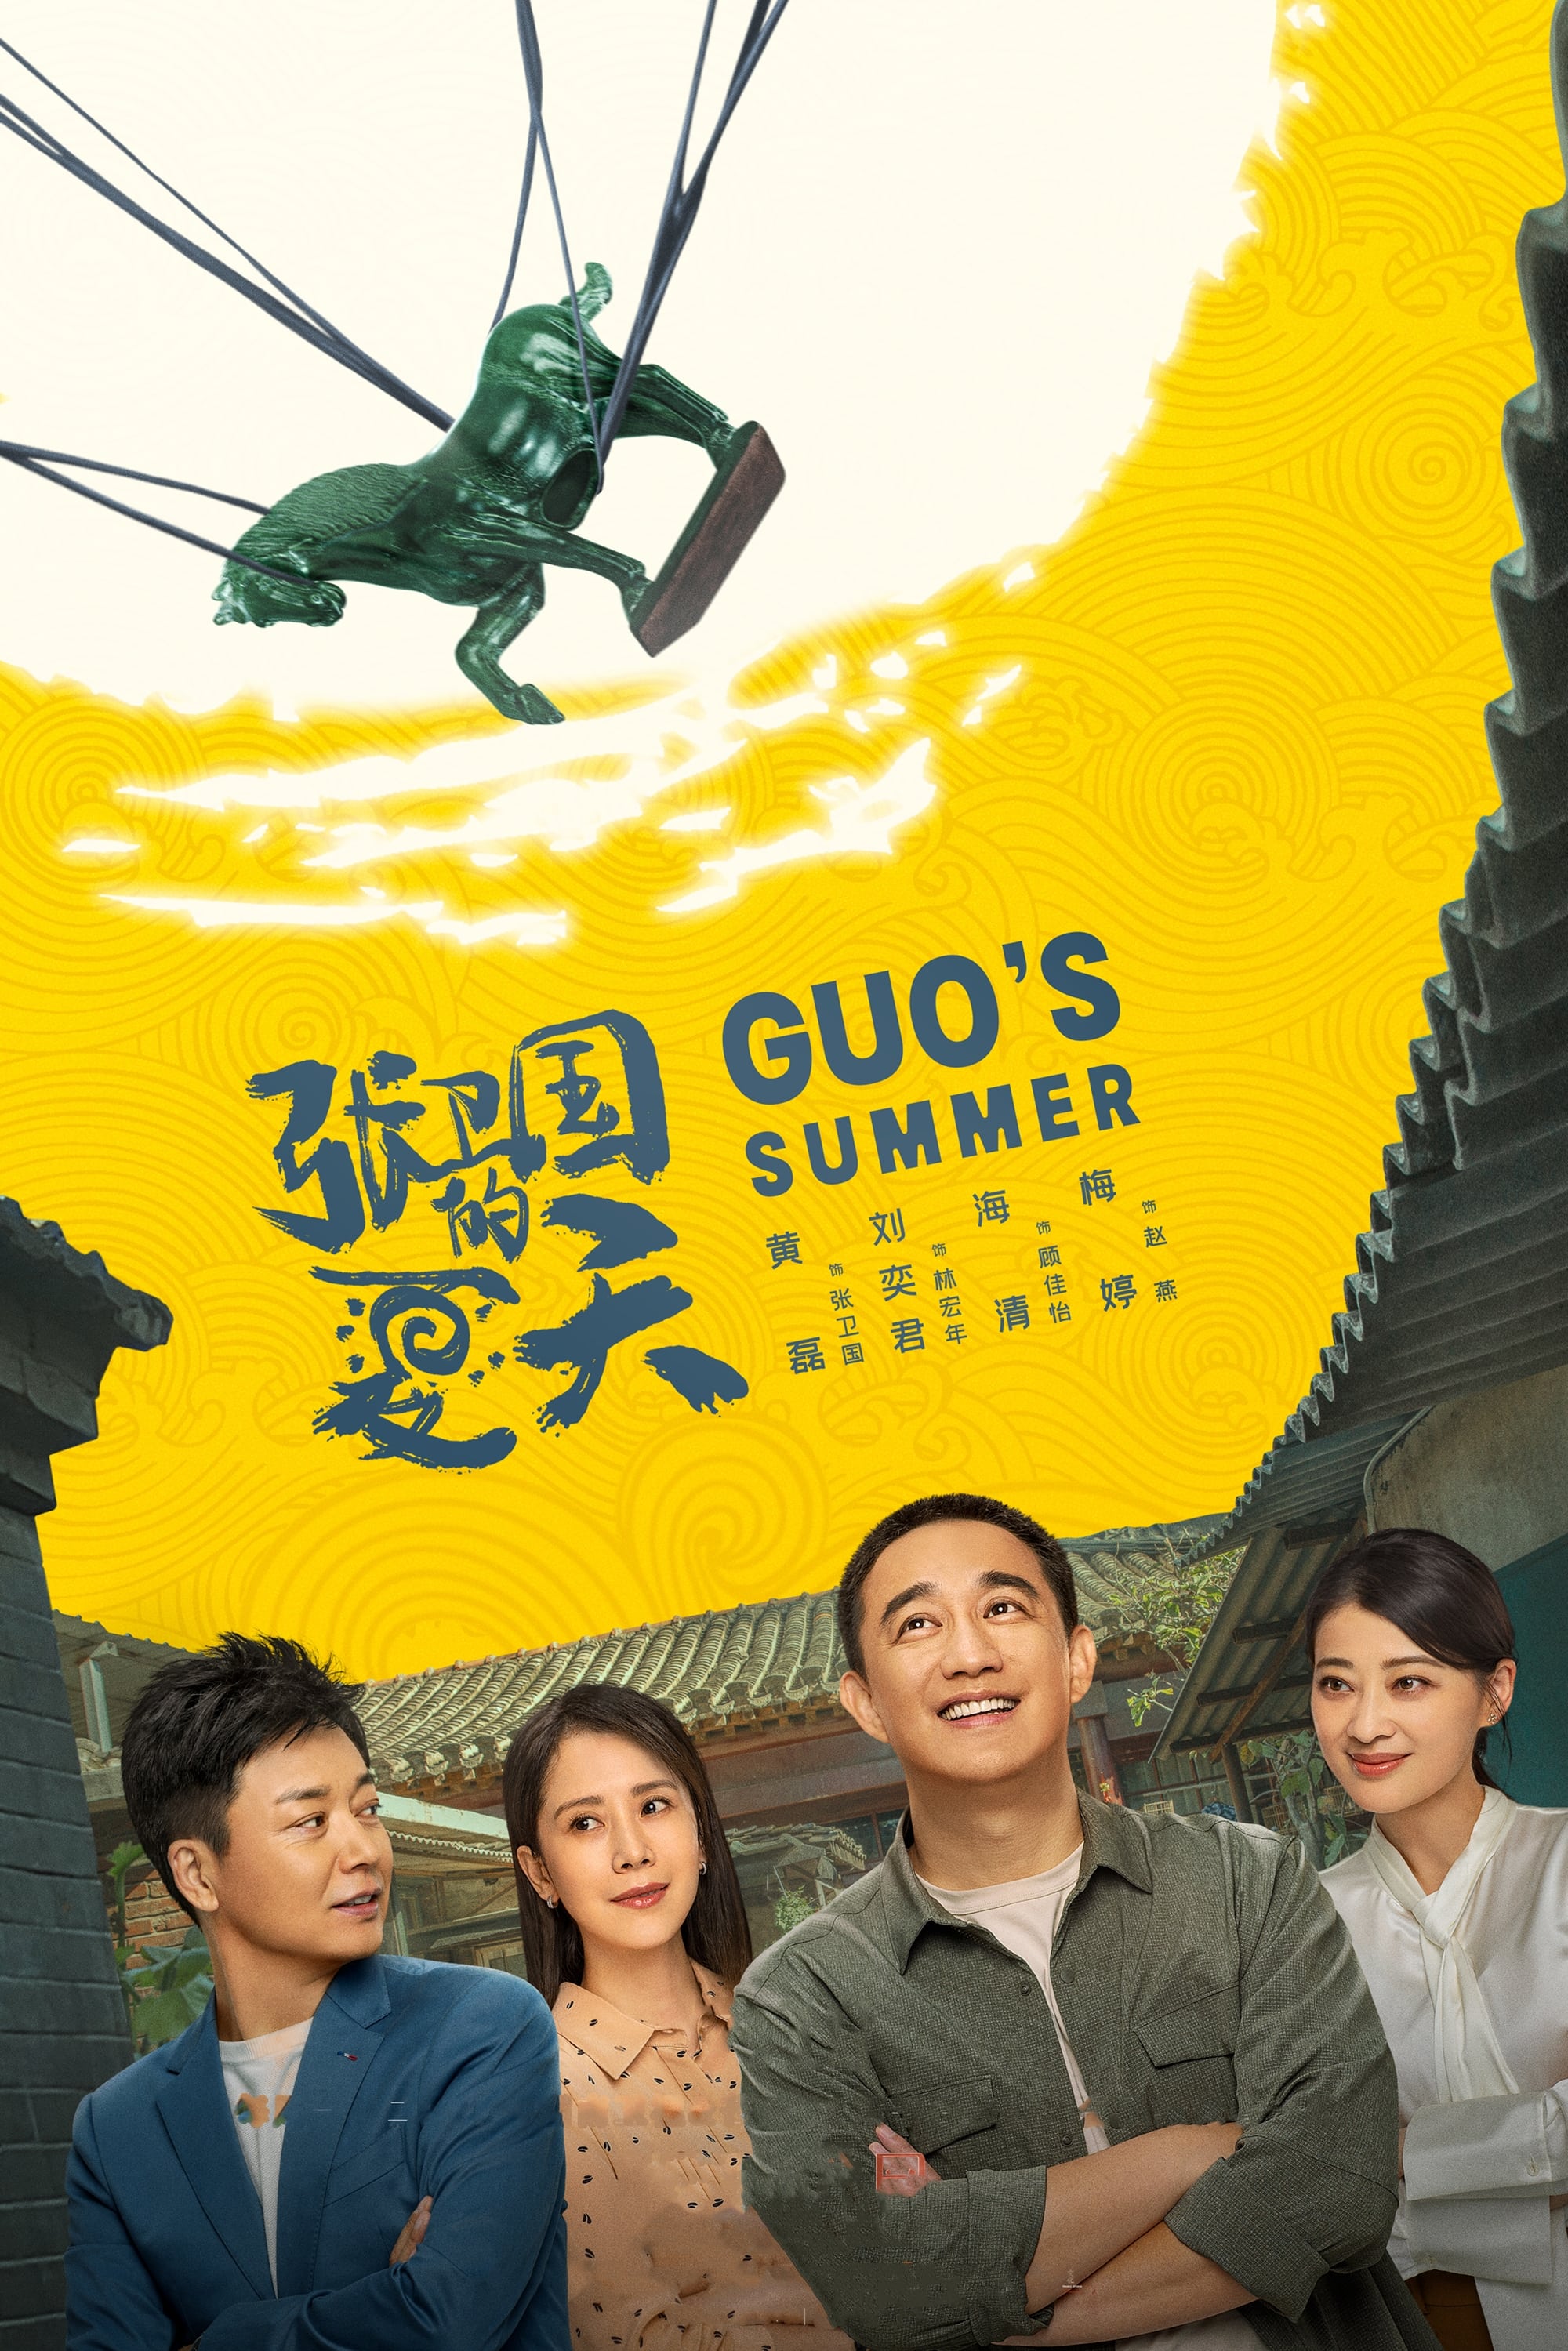 Guo's Summer